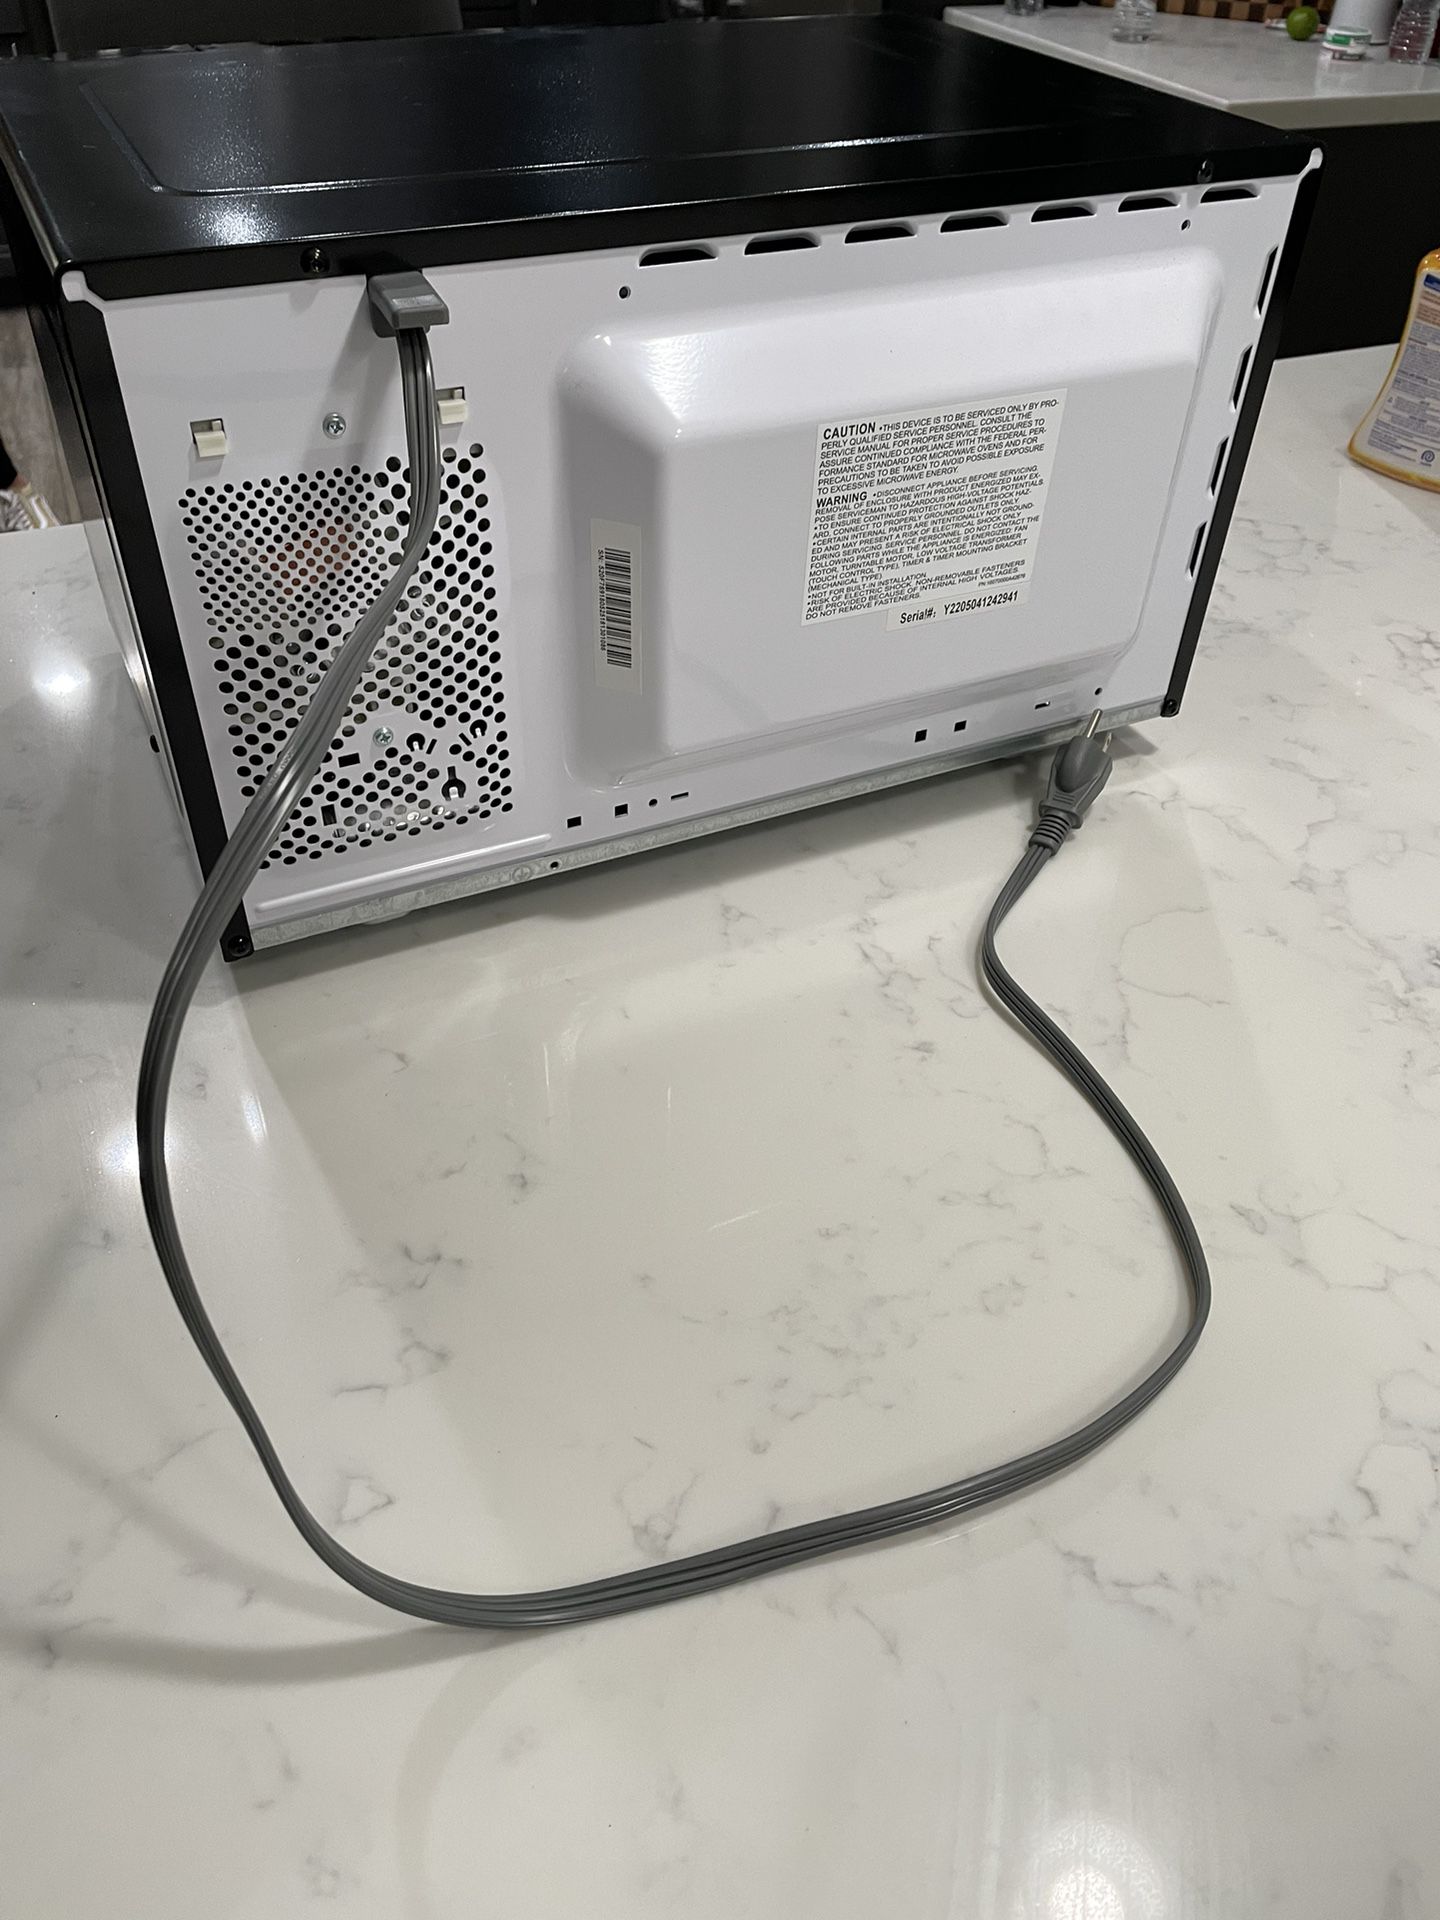 Black+Decker Microwave Ovens, Model EM720CB7 for Sale in Palatine, IL -  OfferUp